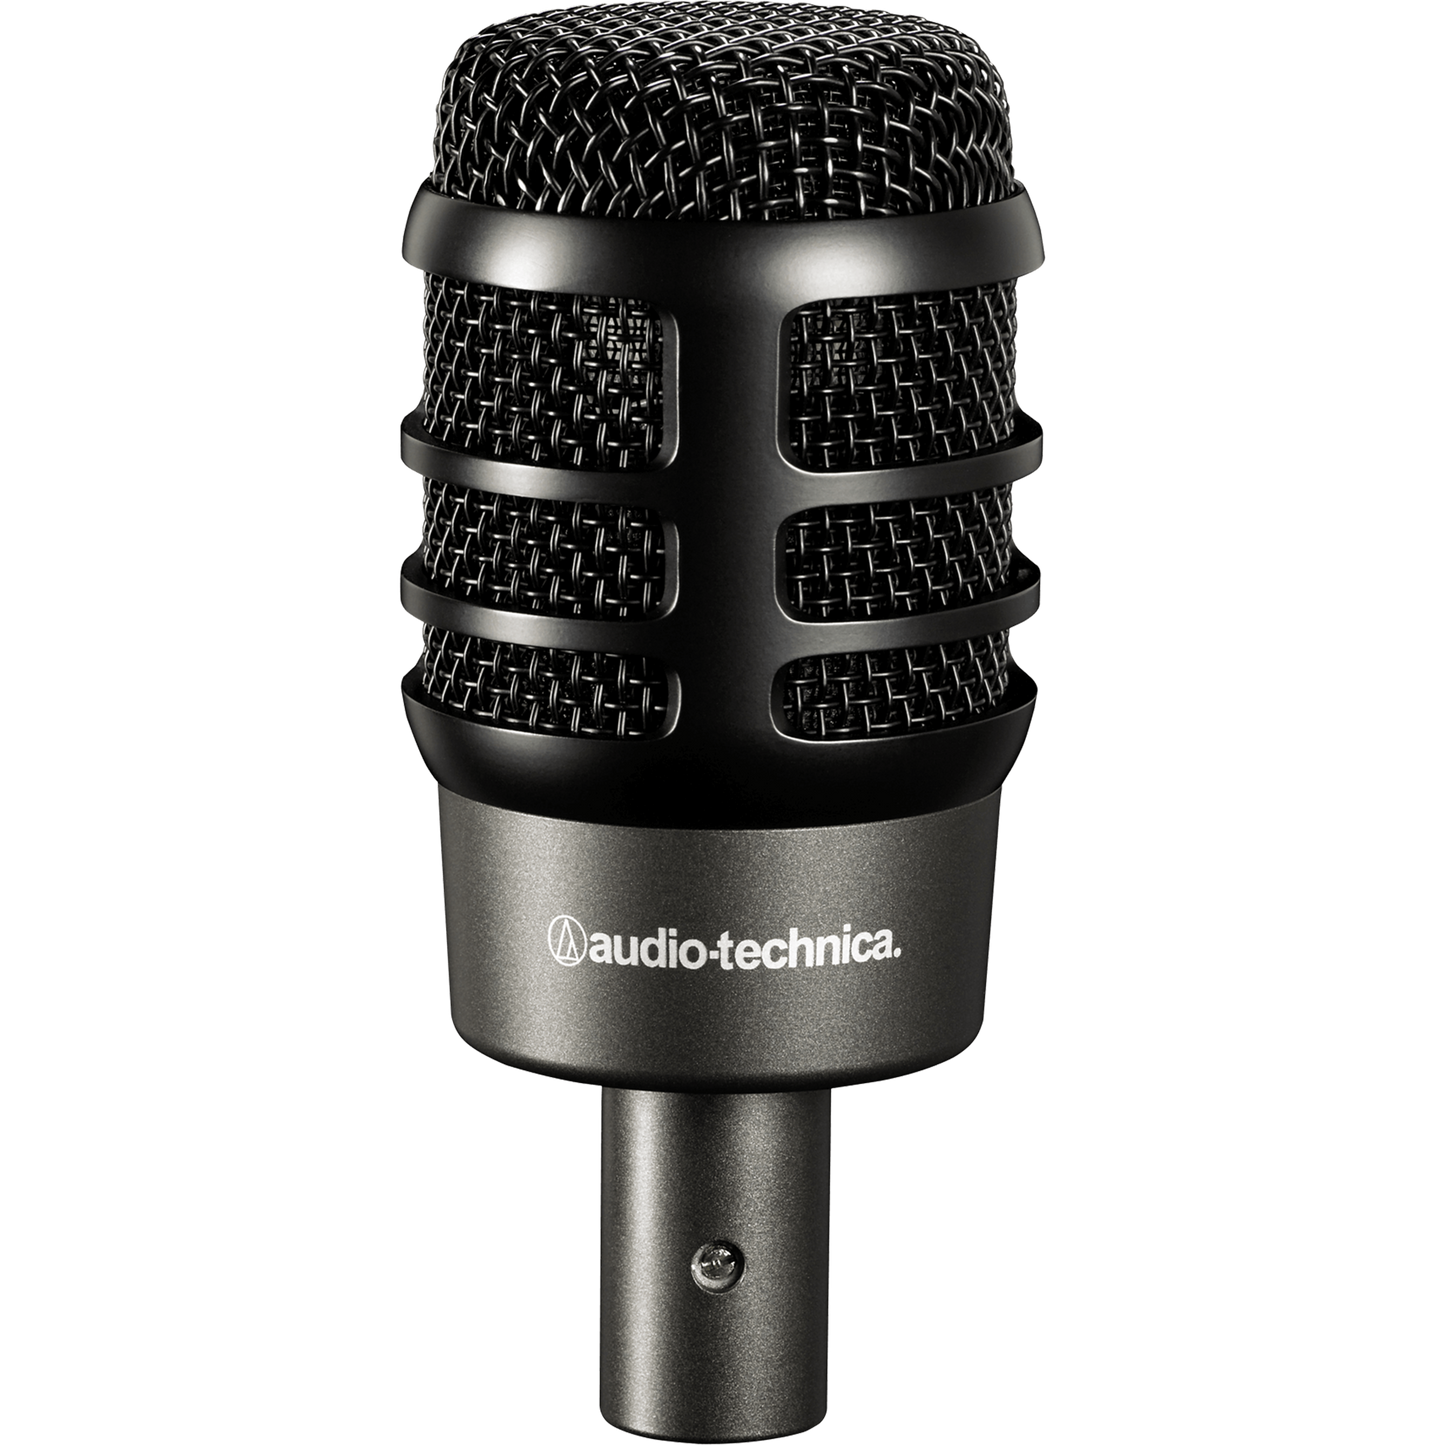 Audio Technica ATM-250 Hypercardioid Dynamic Instrument Microphone